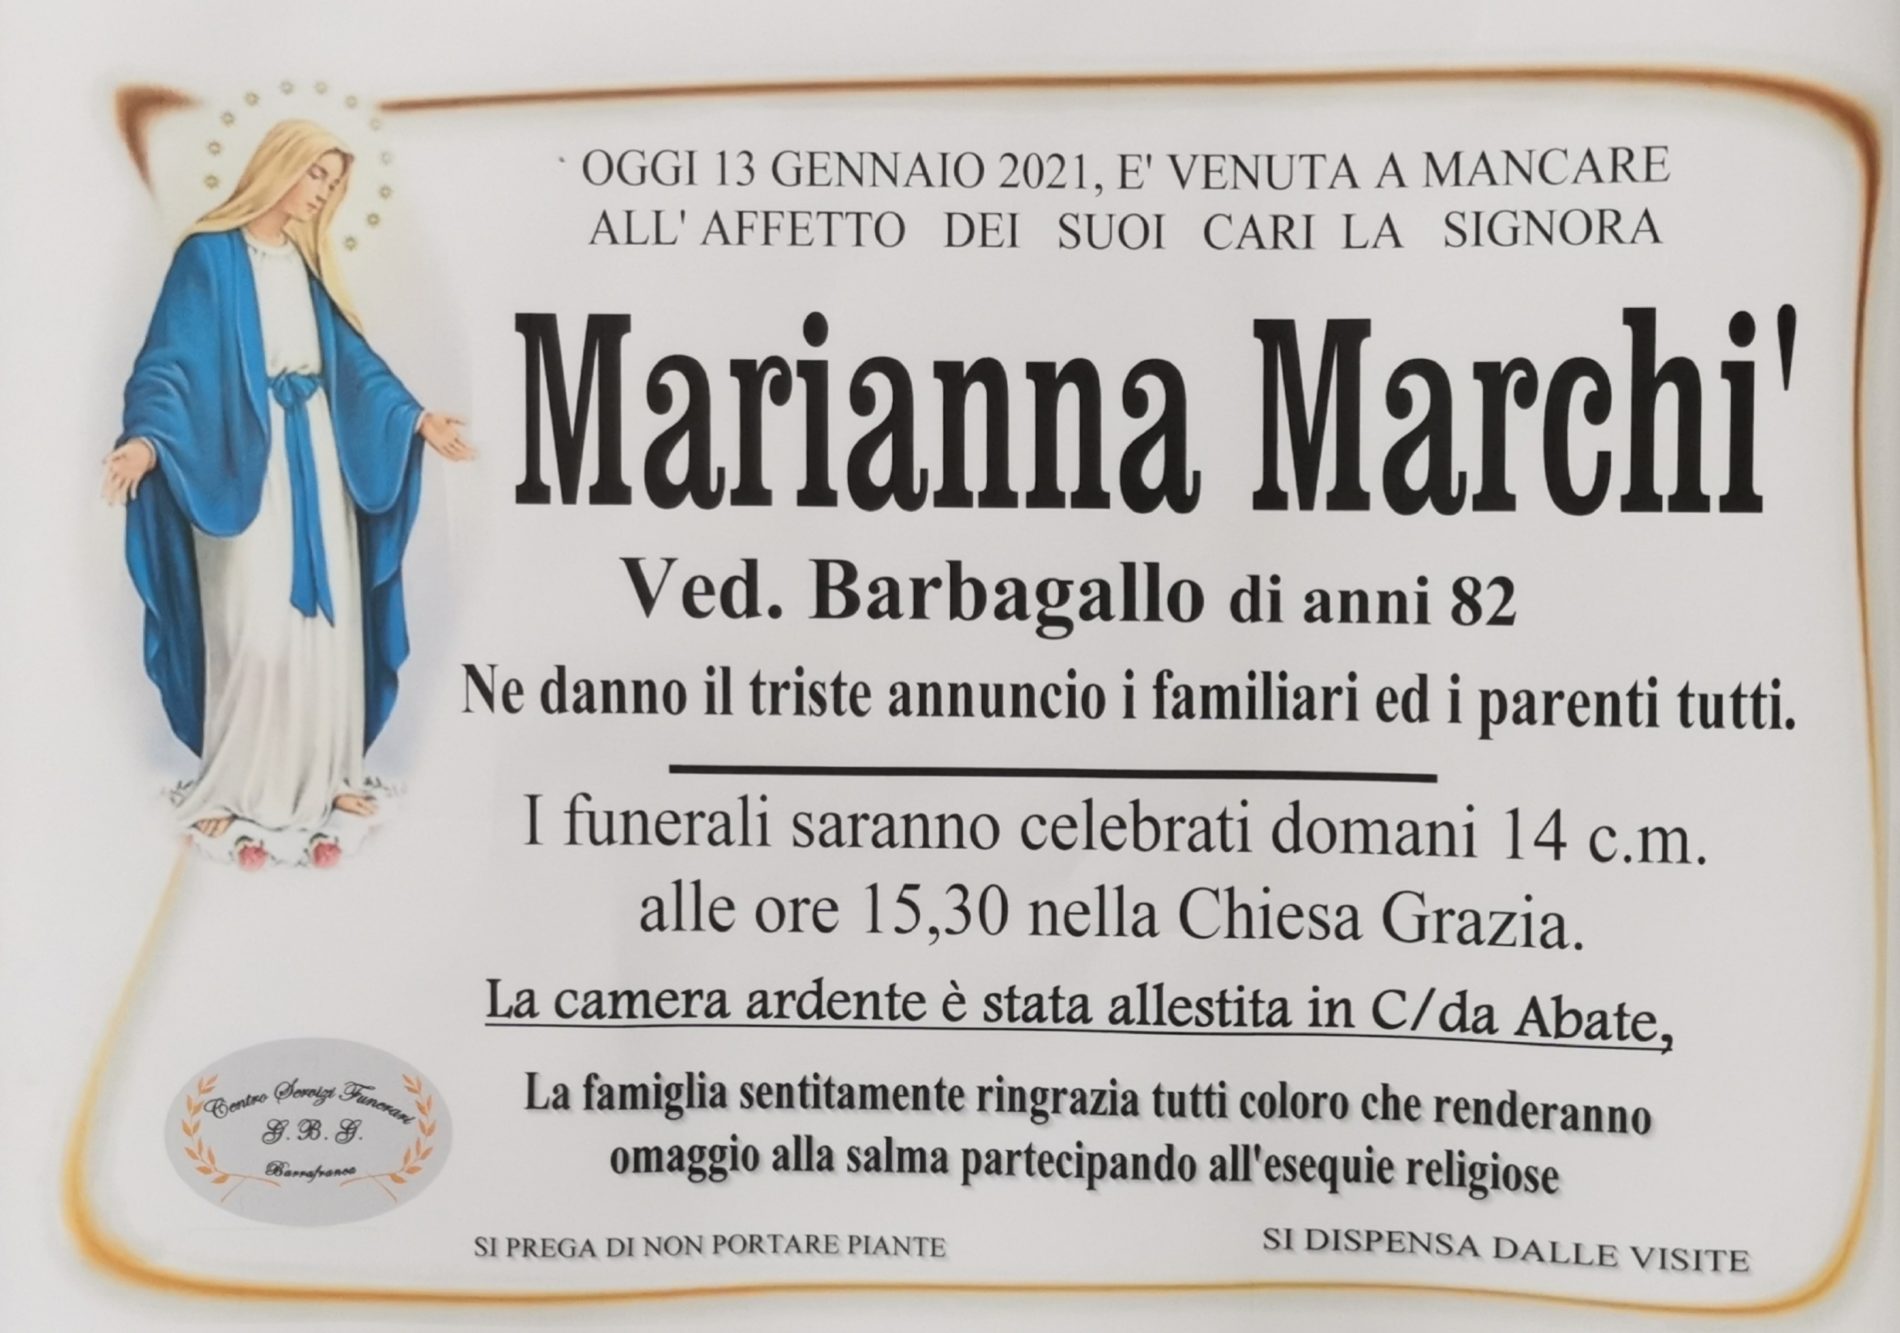 Annuncio servizi funerari agenzia G.B.G. sig.ra Marianna Marchì ved. Barbagallo anni 82